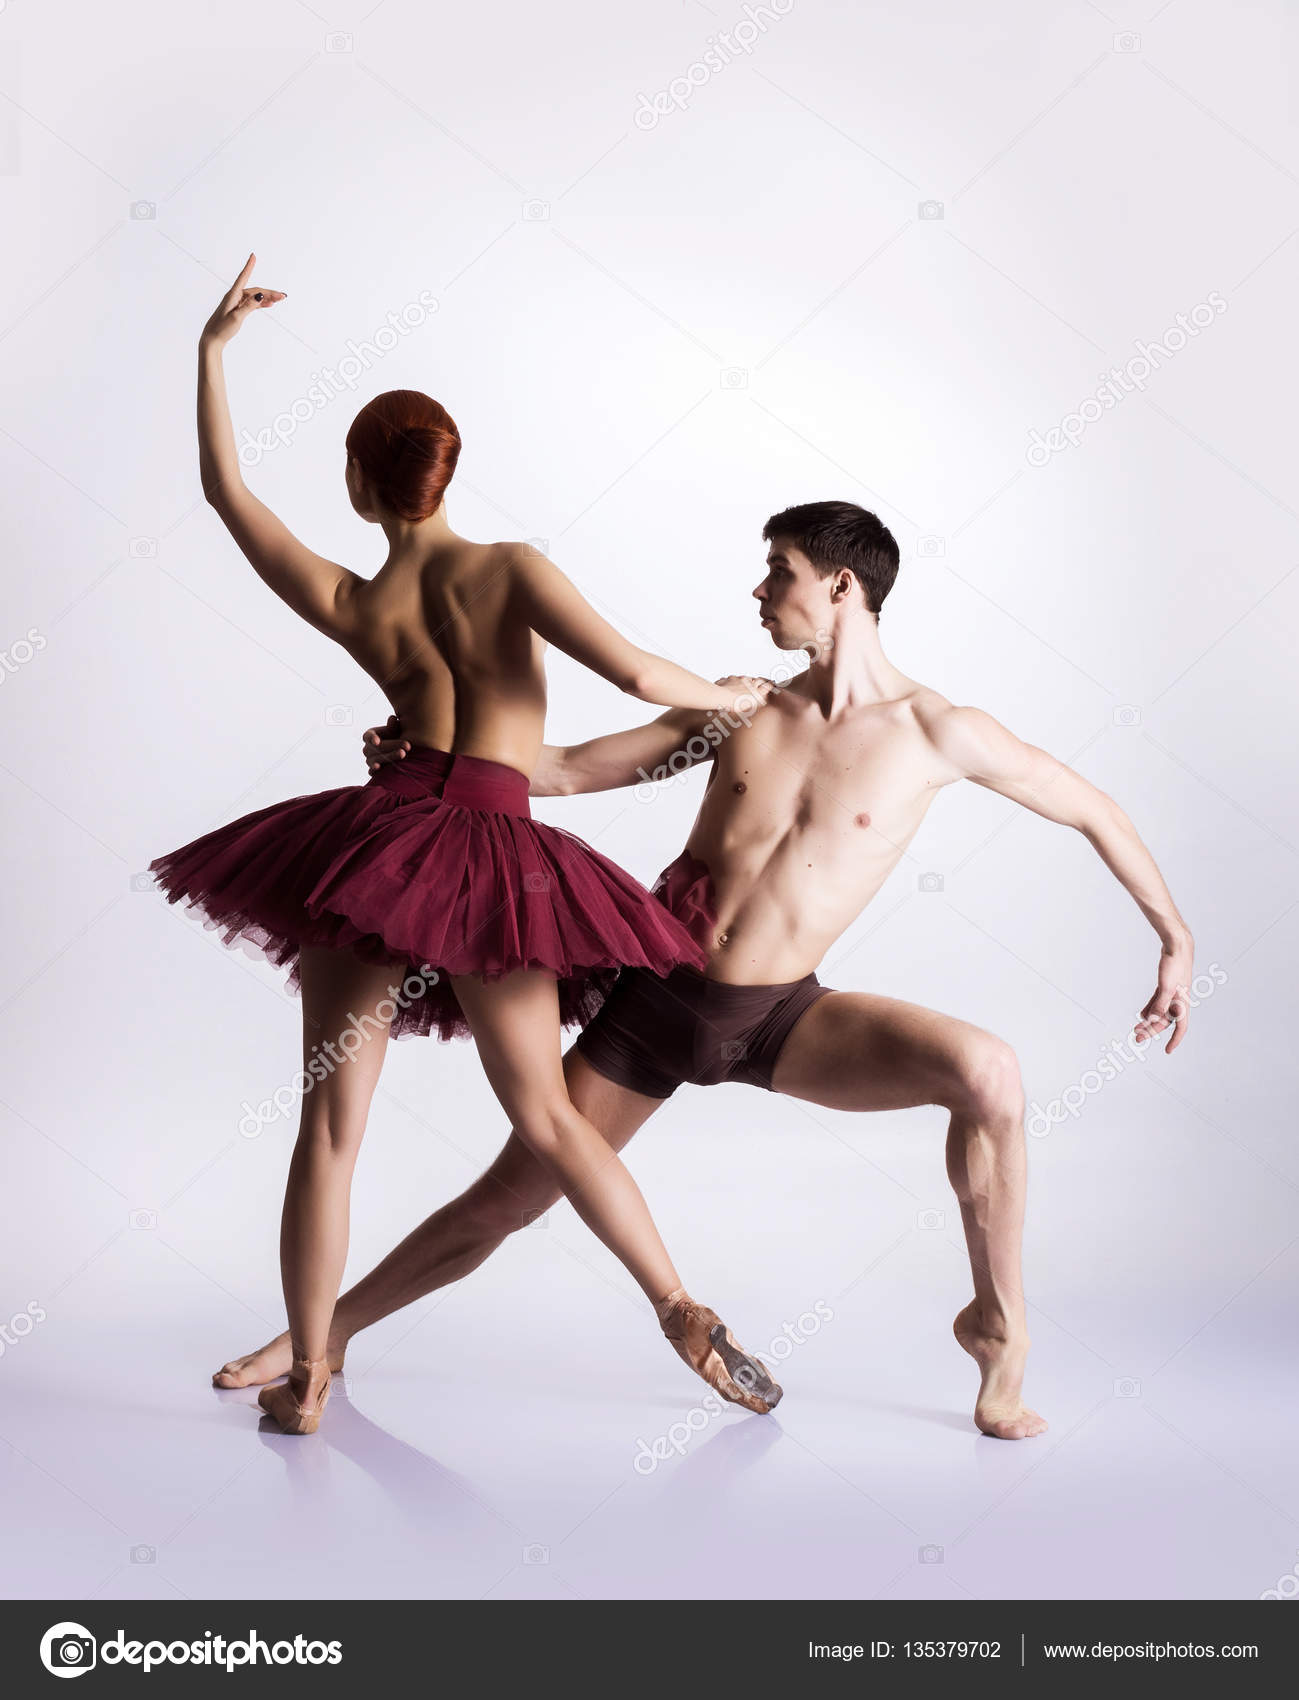 Ballet dancers in art performance — Stock Photo © shmeljov #135379702